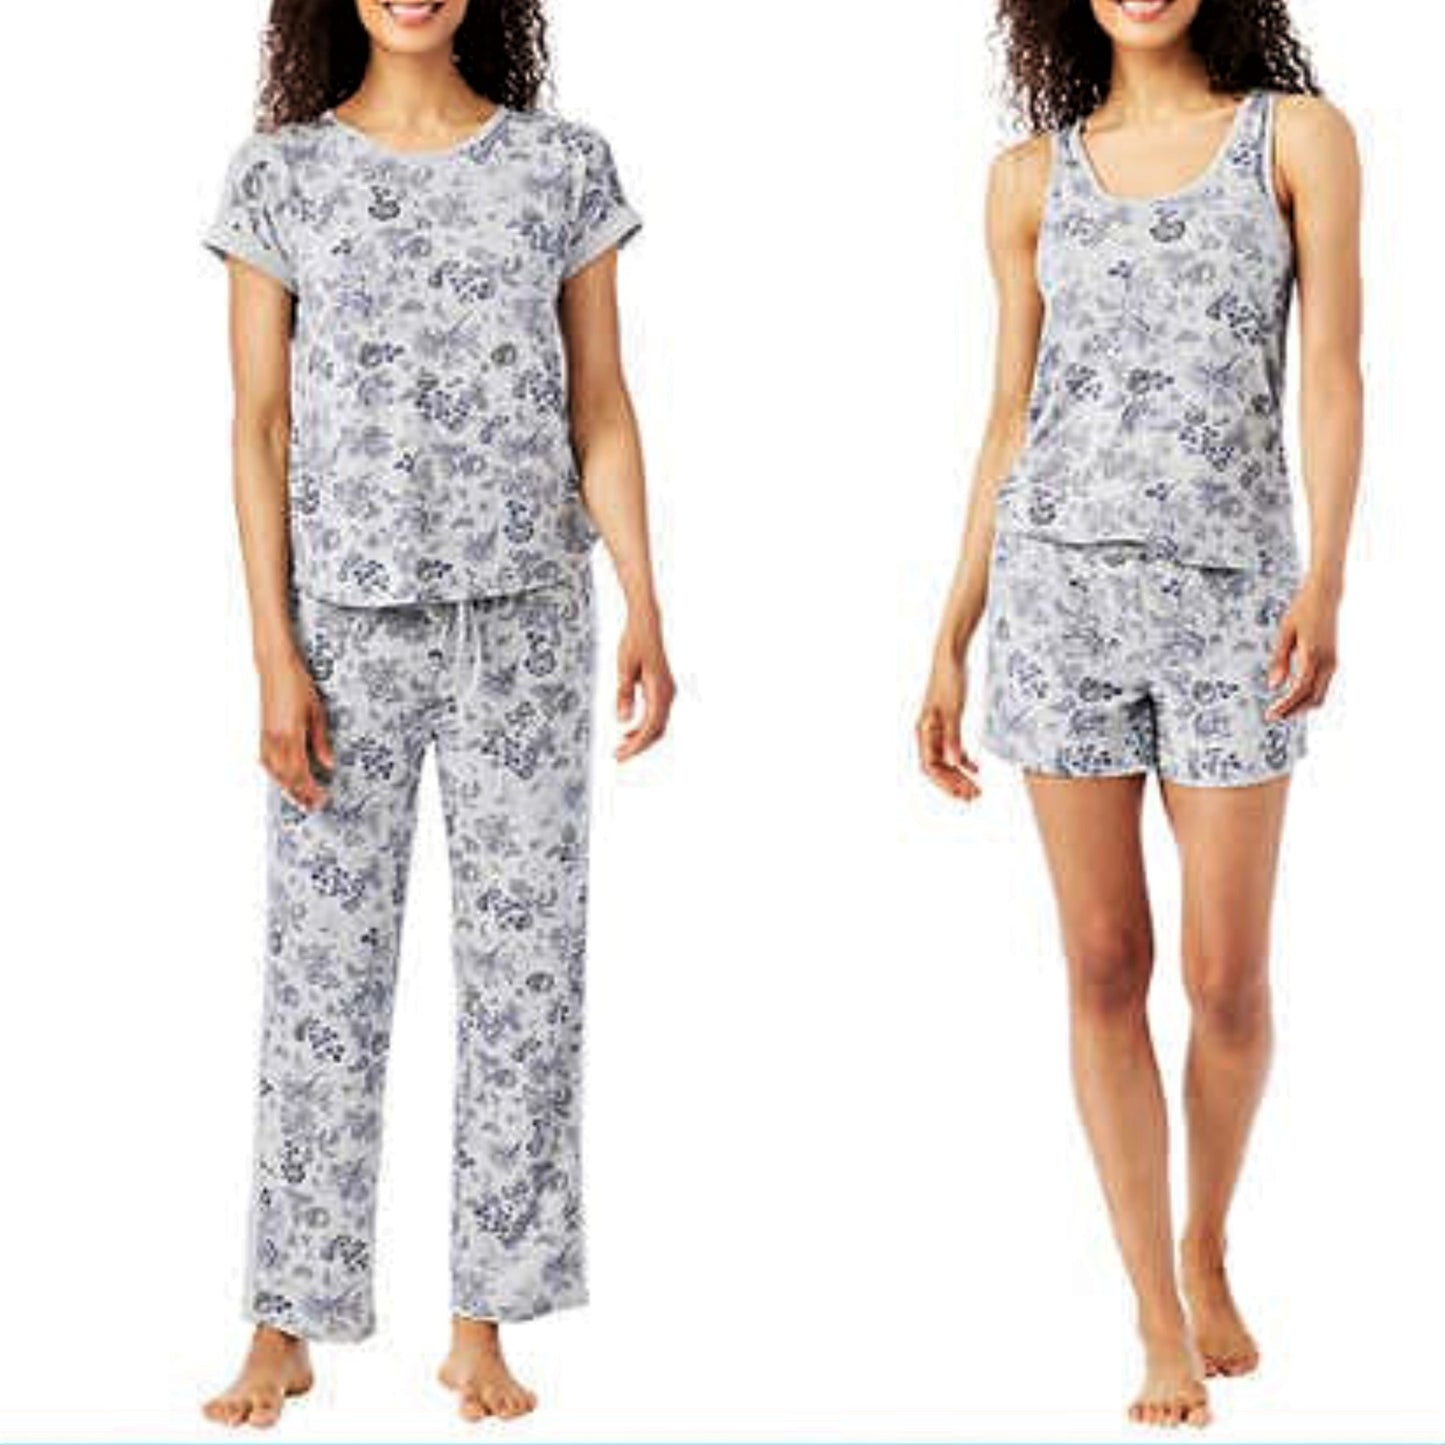 Lucky Brand Women's Denim Floral 4-Piece Lounge Pajama Set